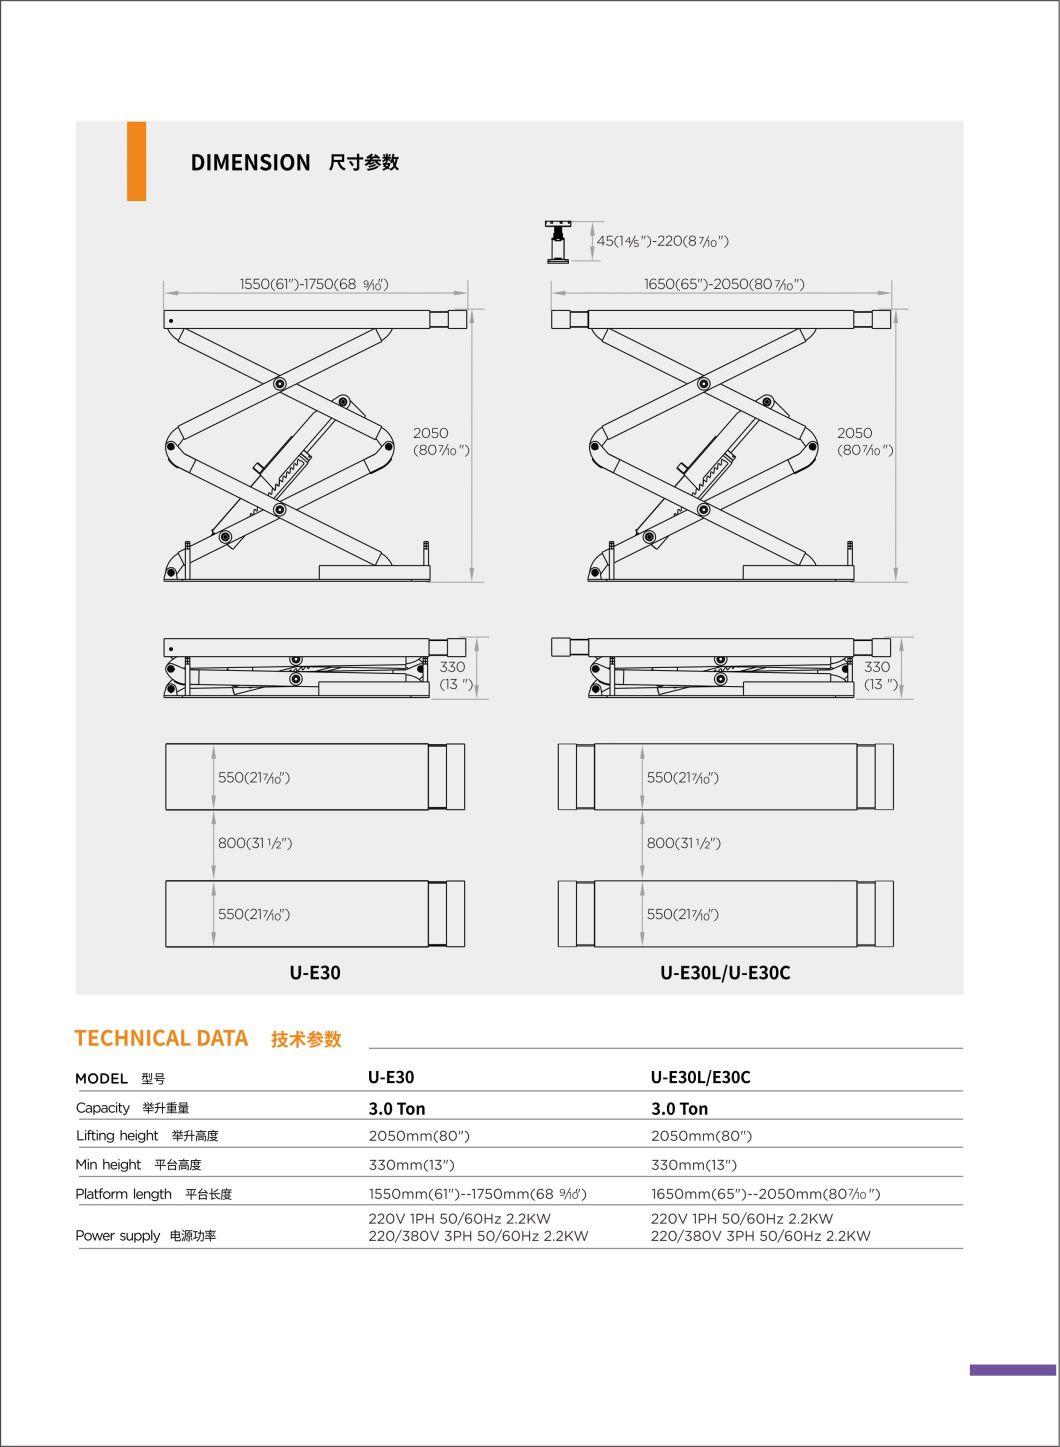 Unite Platform Scissor Lift 3.0 T Capacity U-E30c Full Rise Hydraulic Scissor Lift